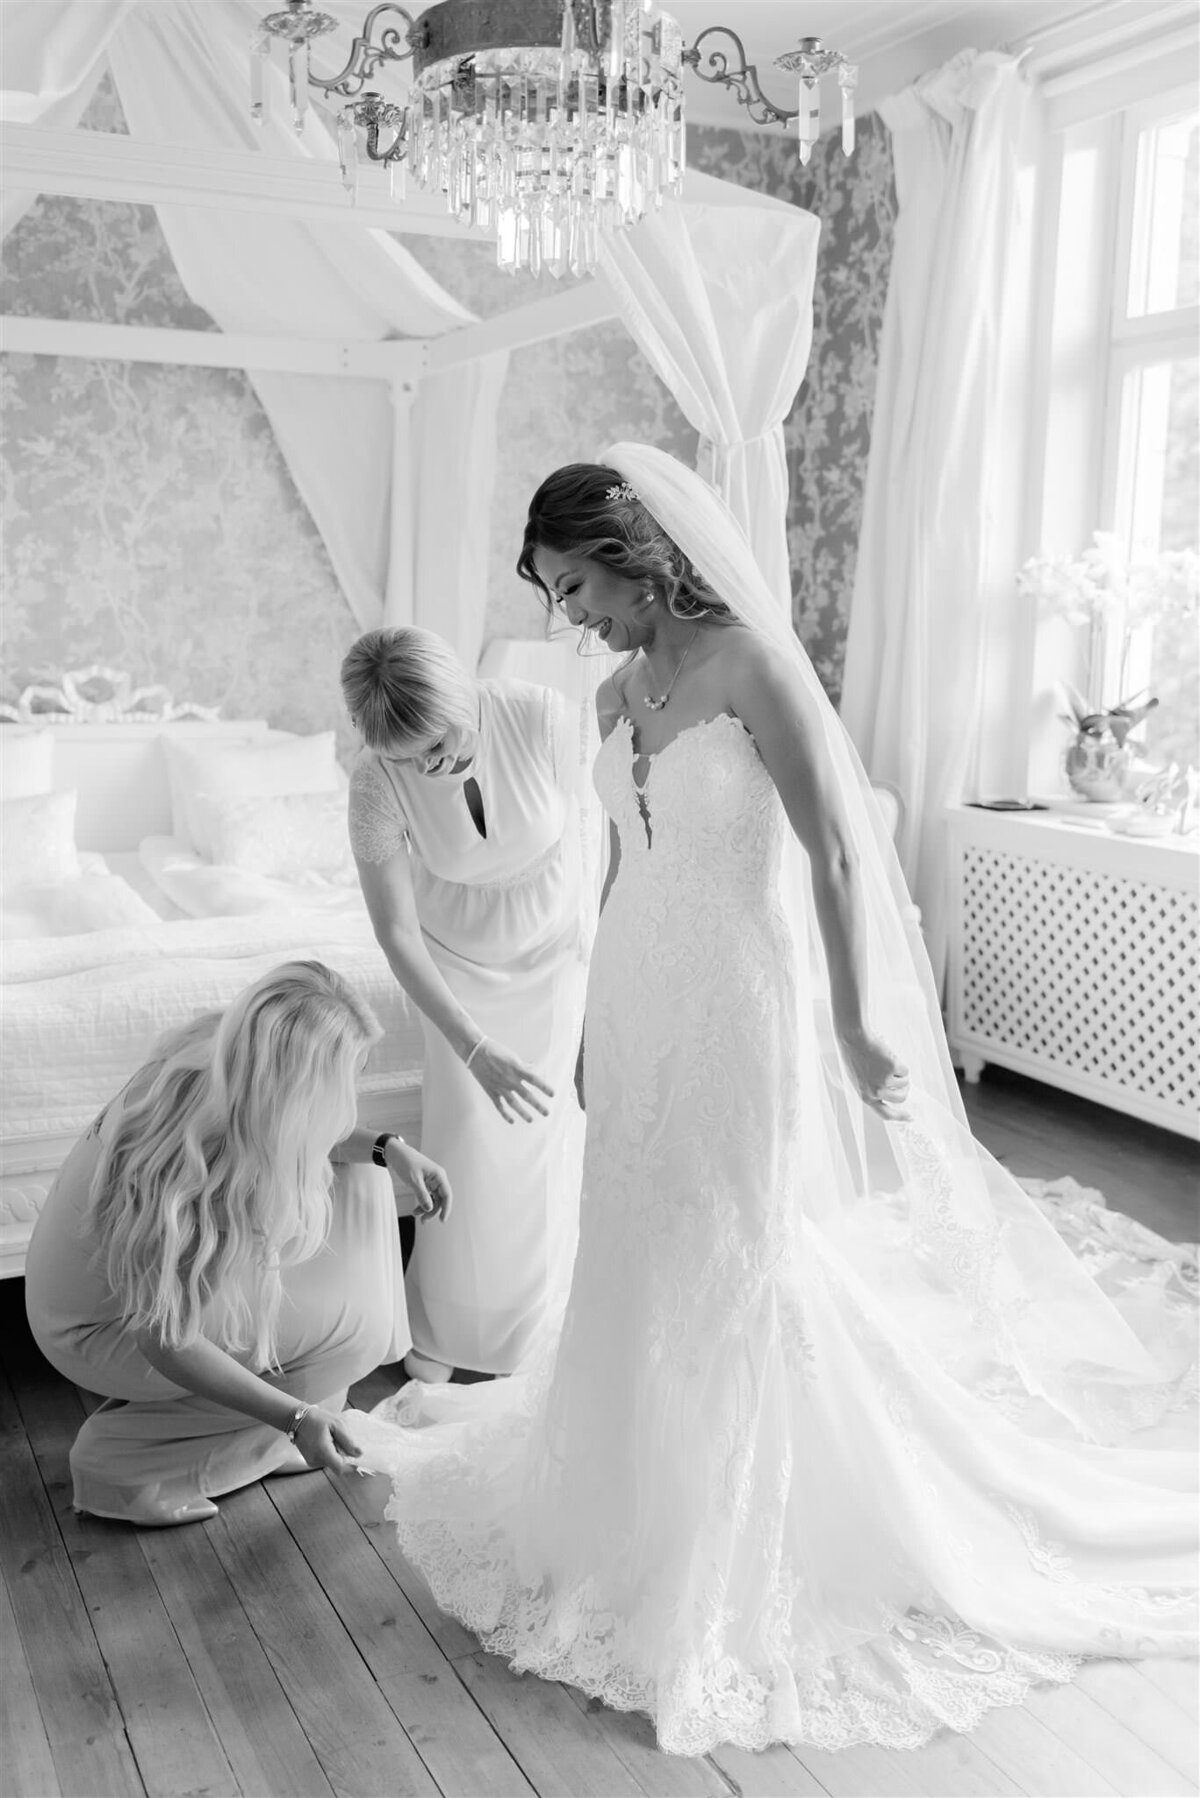 Wedding Photographer Anna Lundgren - helloalora_Rånäs Slott chateau wedding in Sweden bride with bridesmaids preparation in castle suite